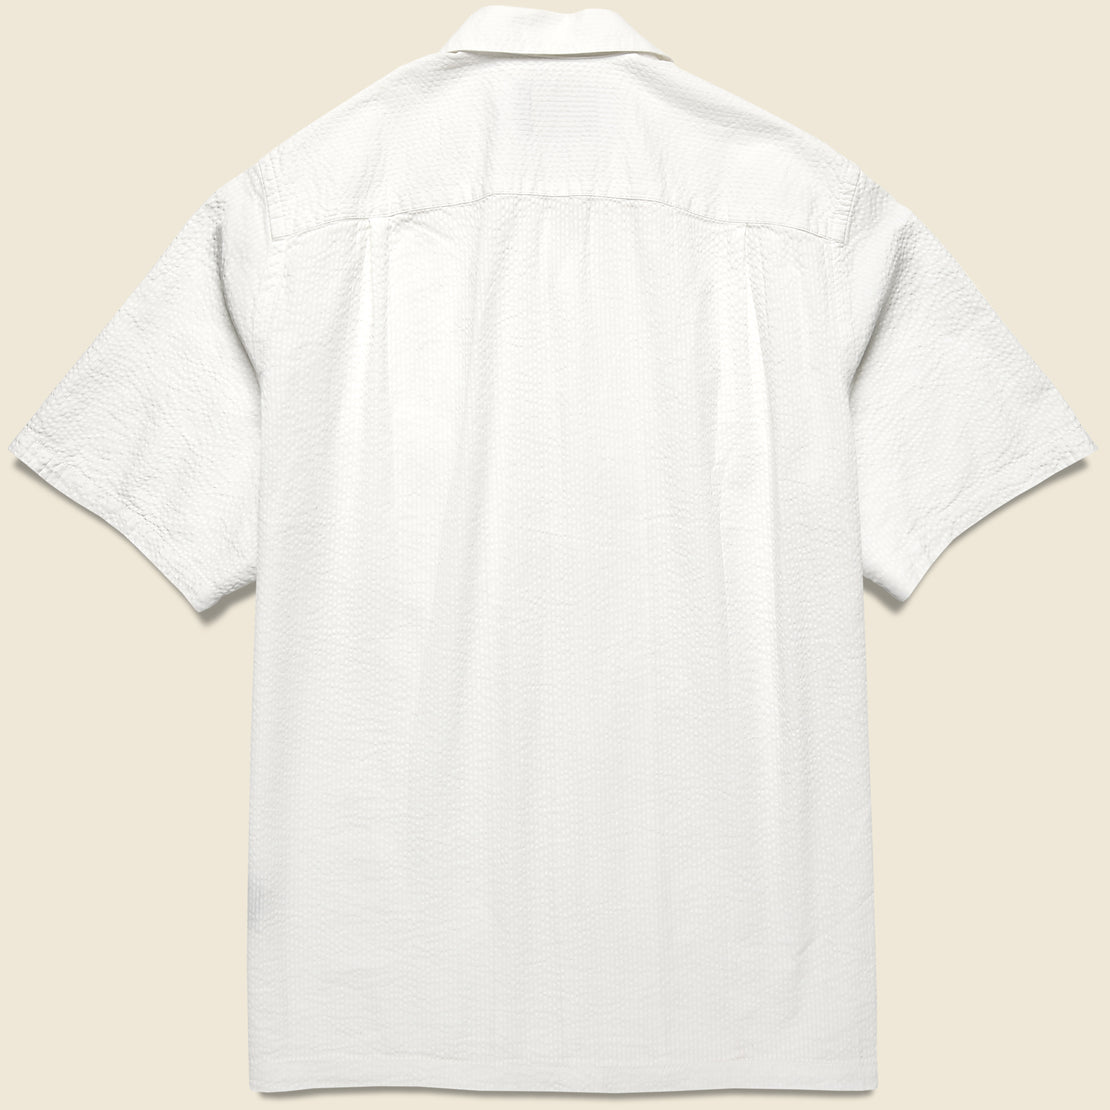 Seersucker Camp Shirt - White - Portuguese Flannel - STAG Provisions - Tops - S/S Woven - Seersucker